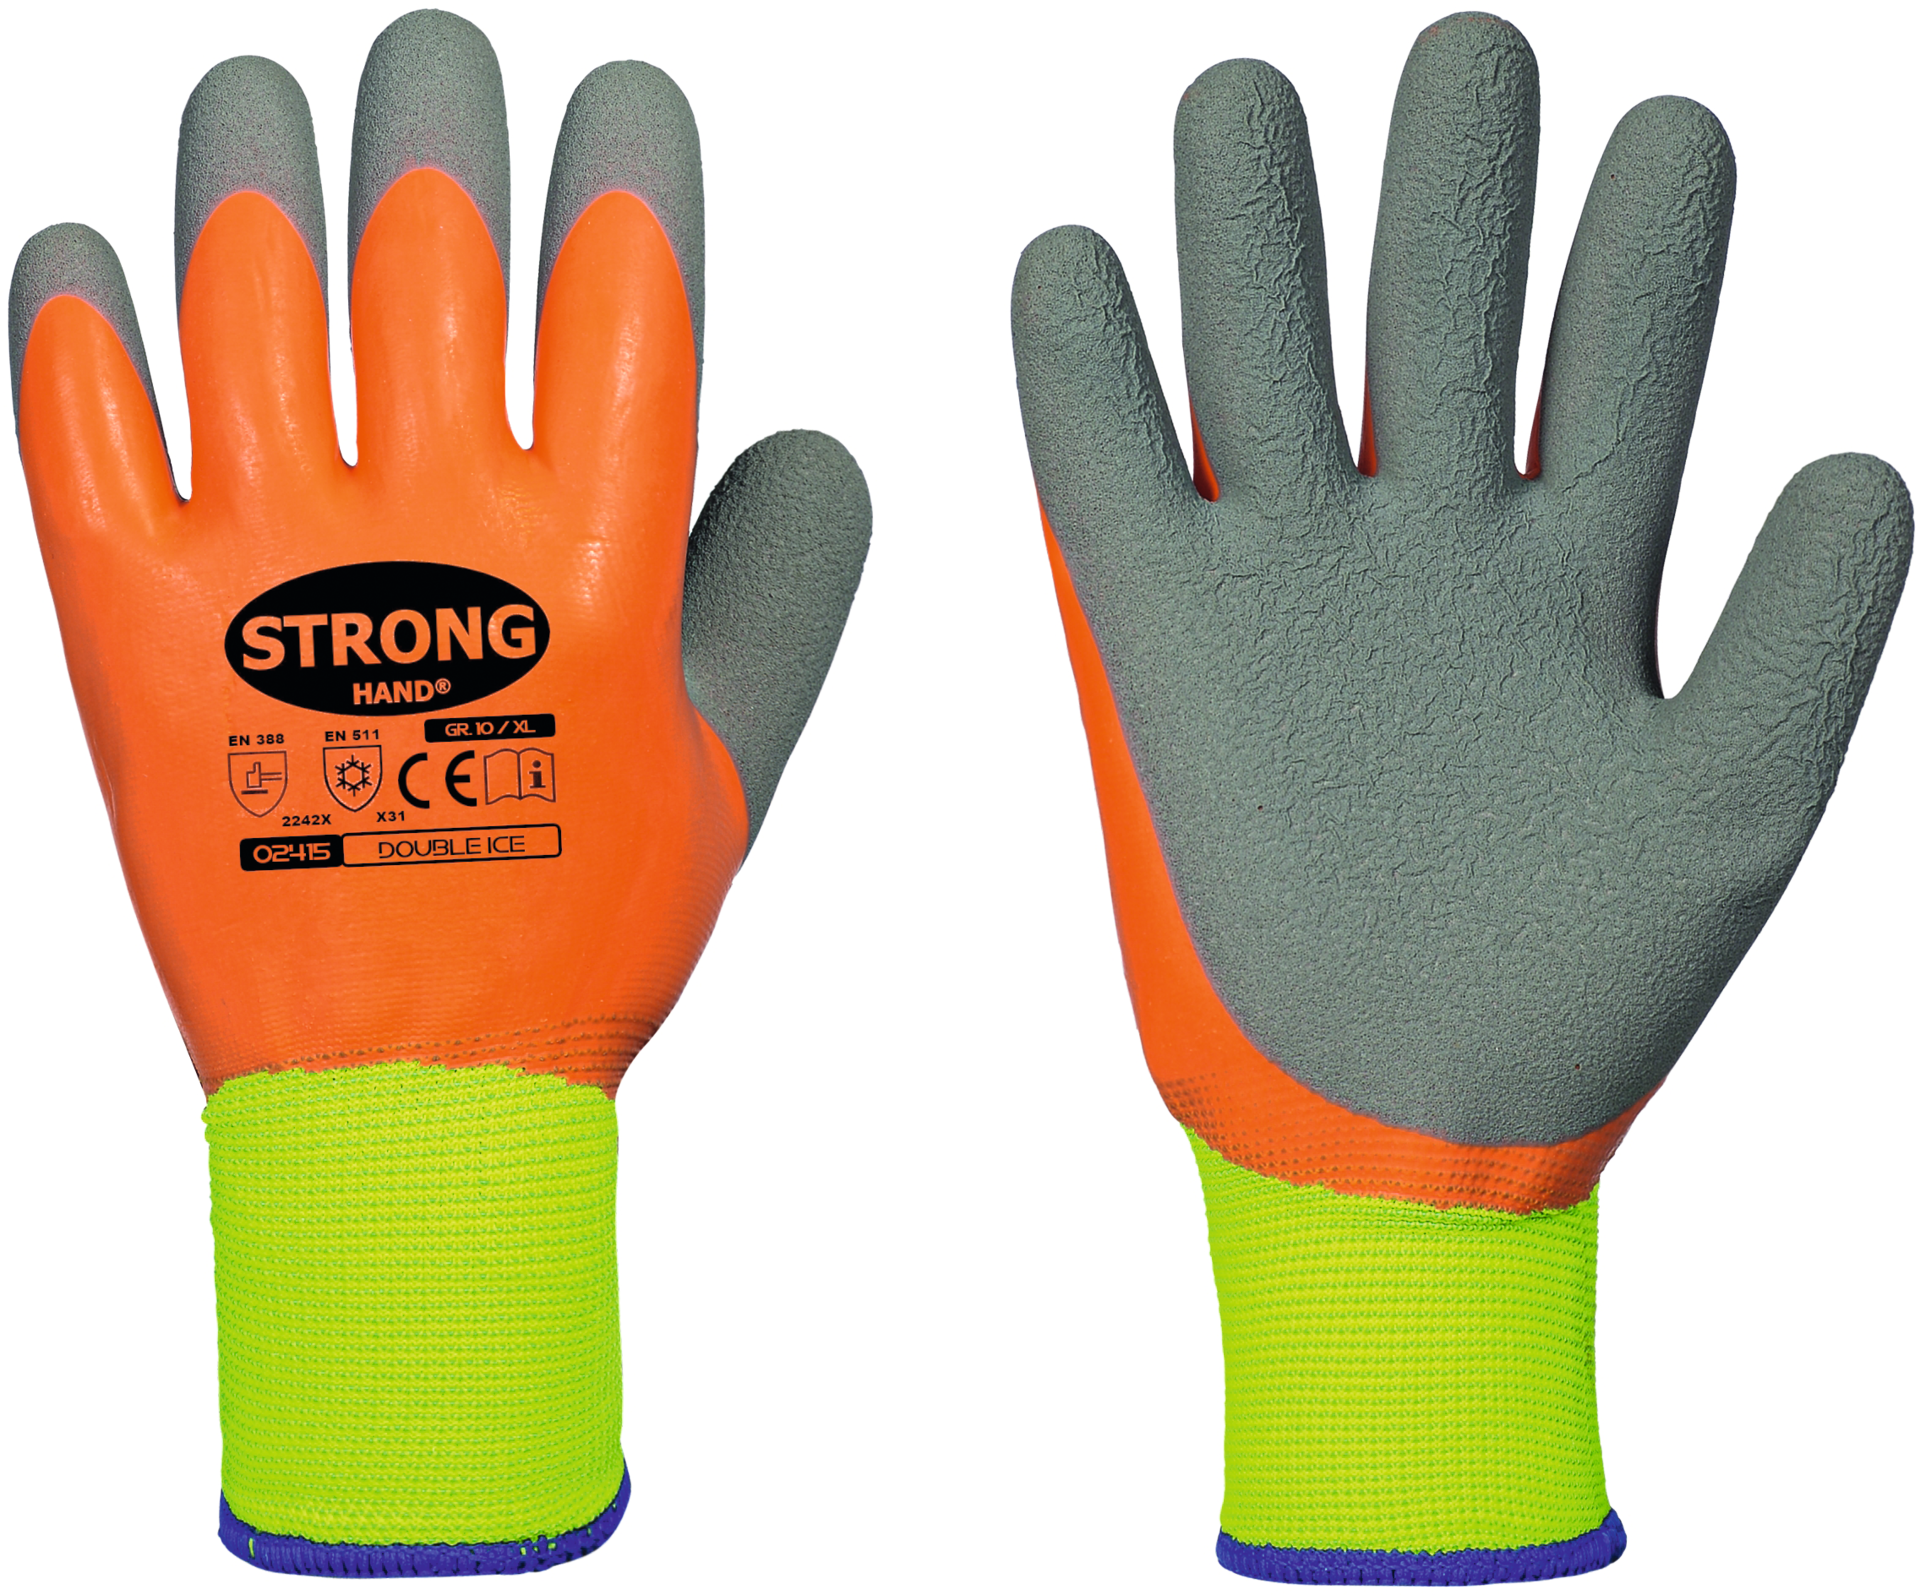 Winter-Handschuh Latexbesch. Gr. 8 orange/neongelb/grau